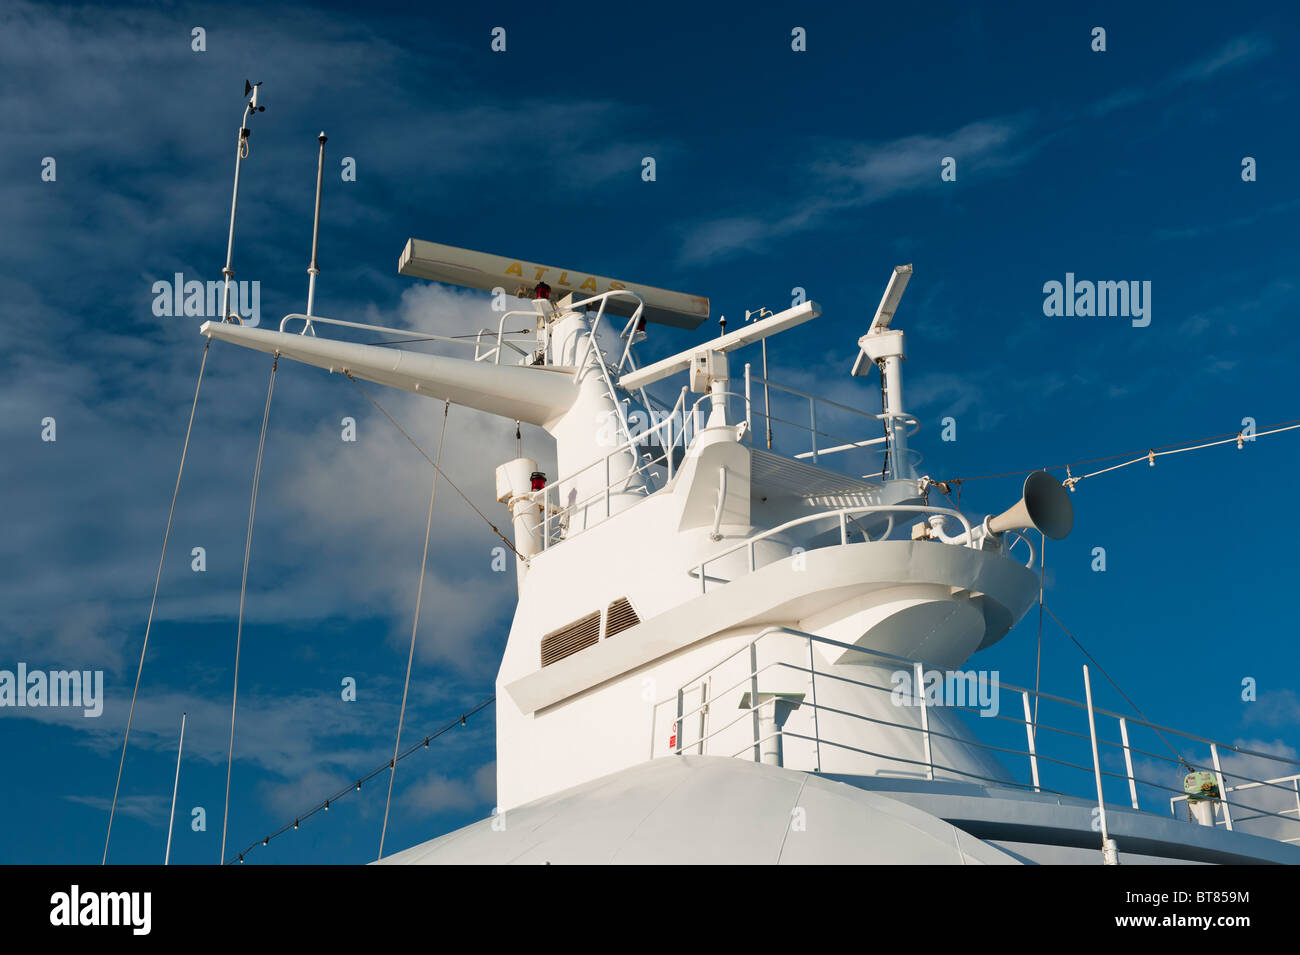 Communication, Navigation and Radar Mast of a Luxury Cruise Ship Stock  Photo - Alamy